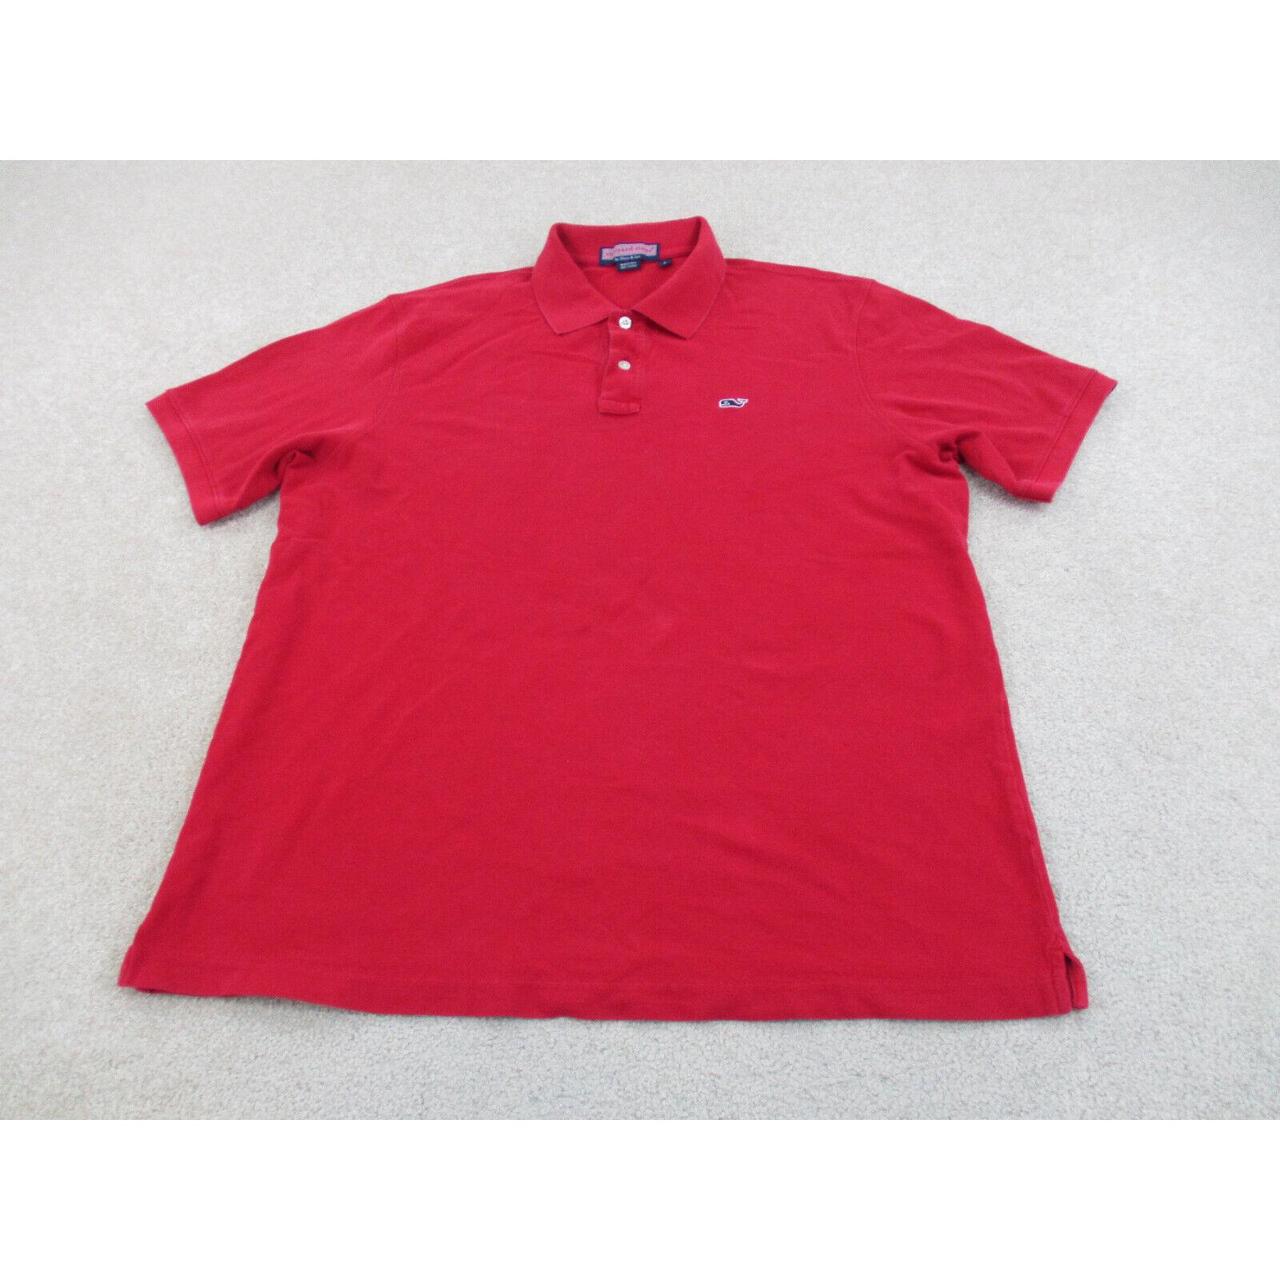 Men's VINEYARD VINES Red Boston Red Sox Polo Shirt - Depop